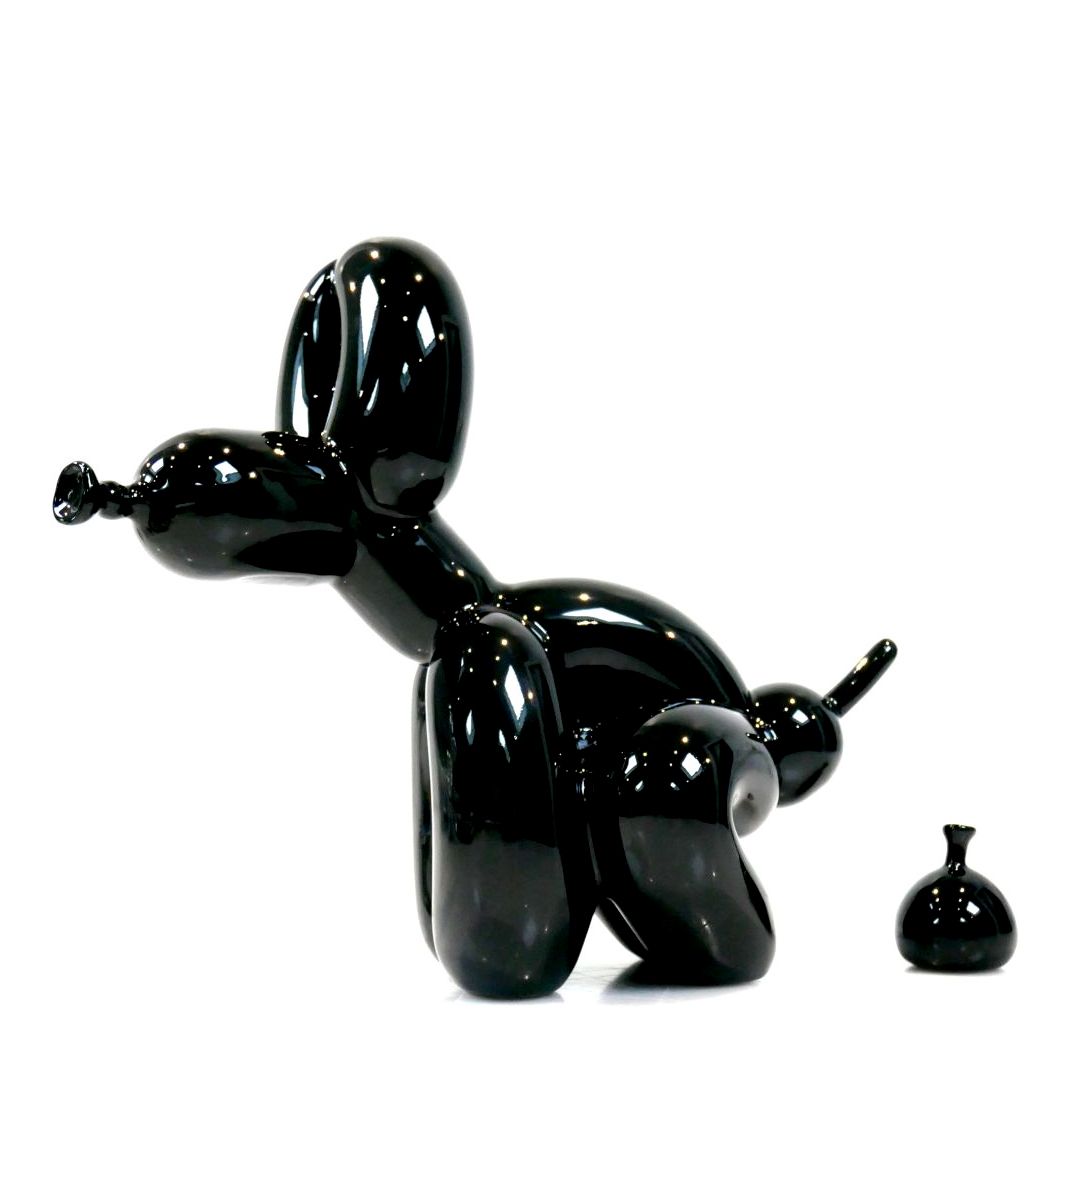 Sculpture Popek Black Porcelain Edition by WHATSHISNAME